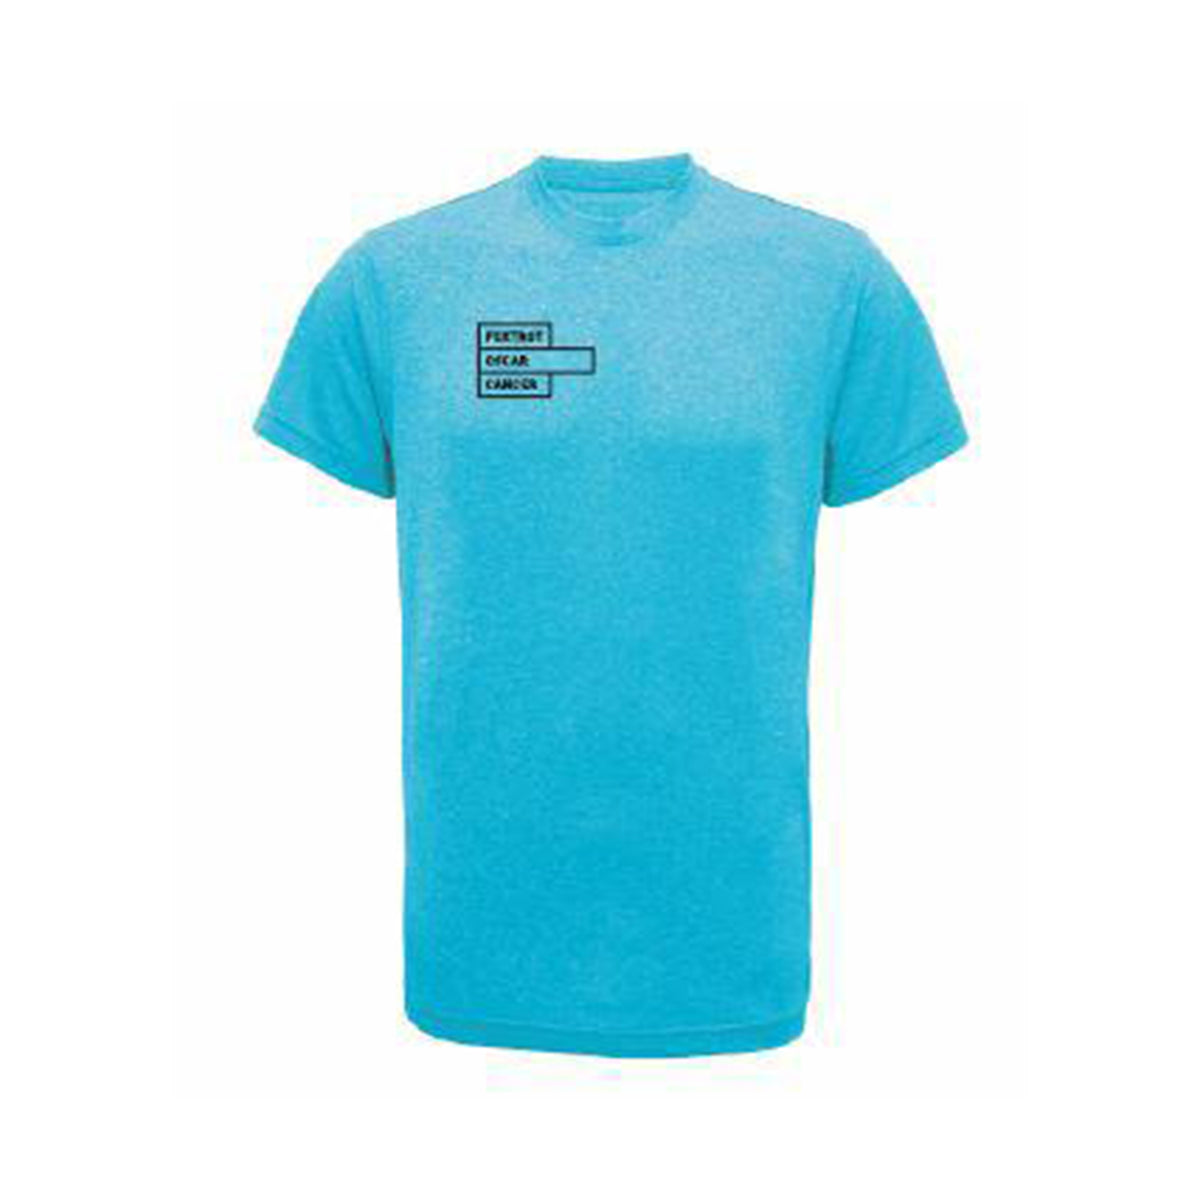 Foxtrot Oscar Gym T-Shirt: Turquoise